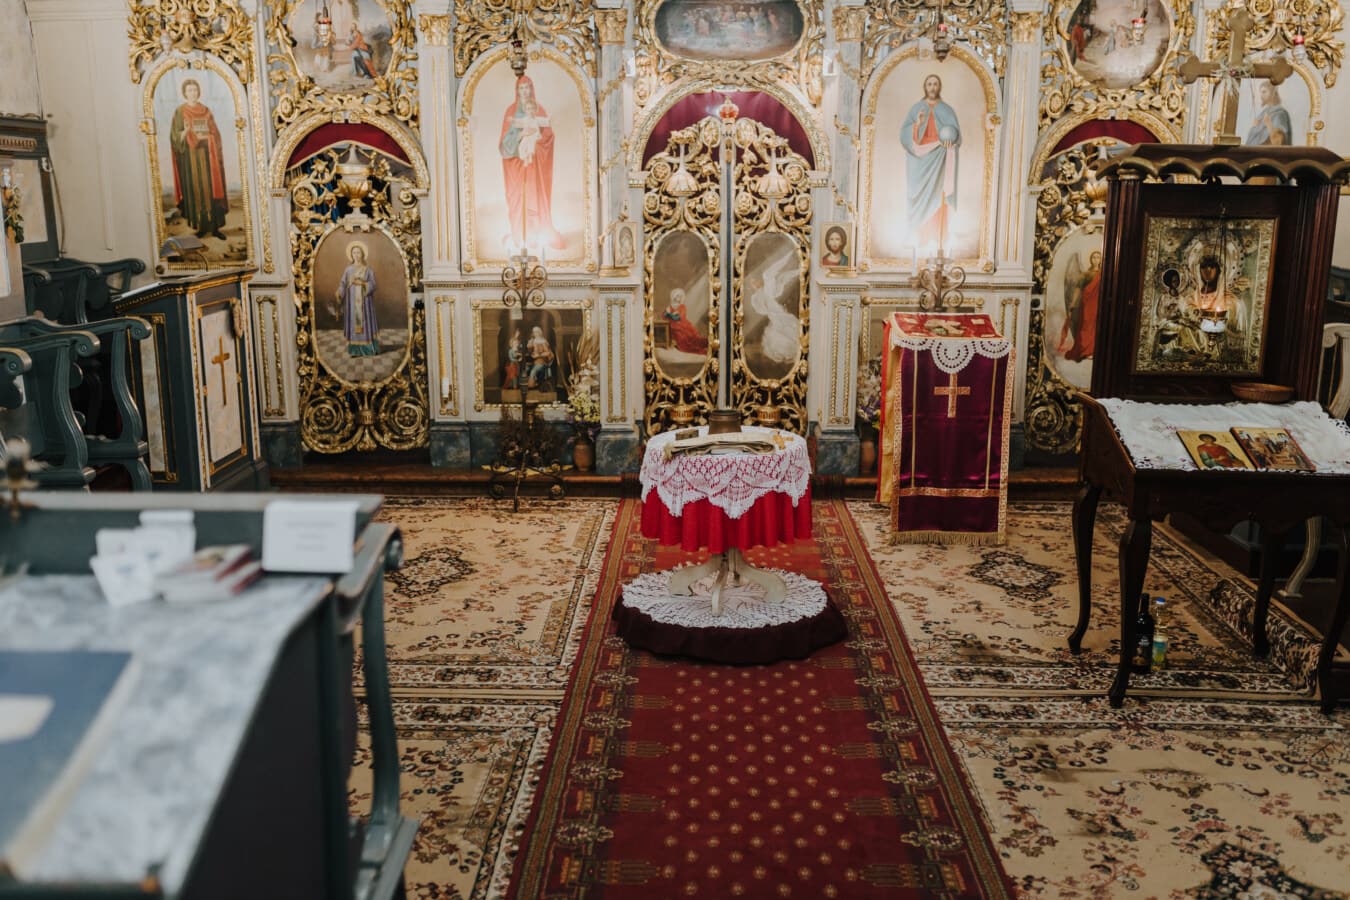 orthodox, monastery, interior, red carpet, furniture, altar, architecture, chair, church, religion